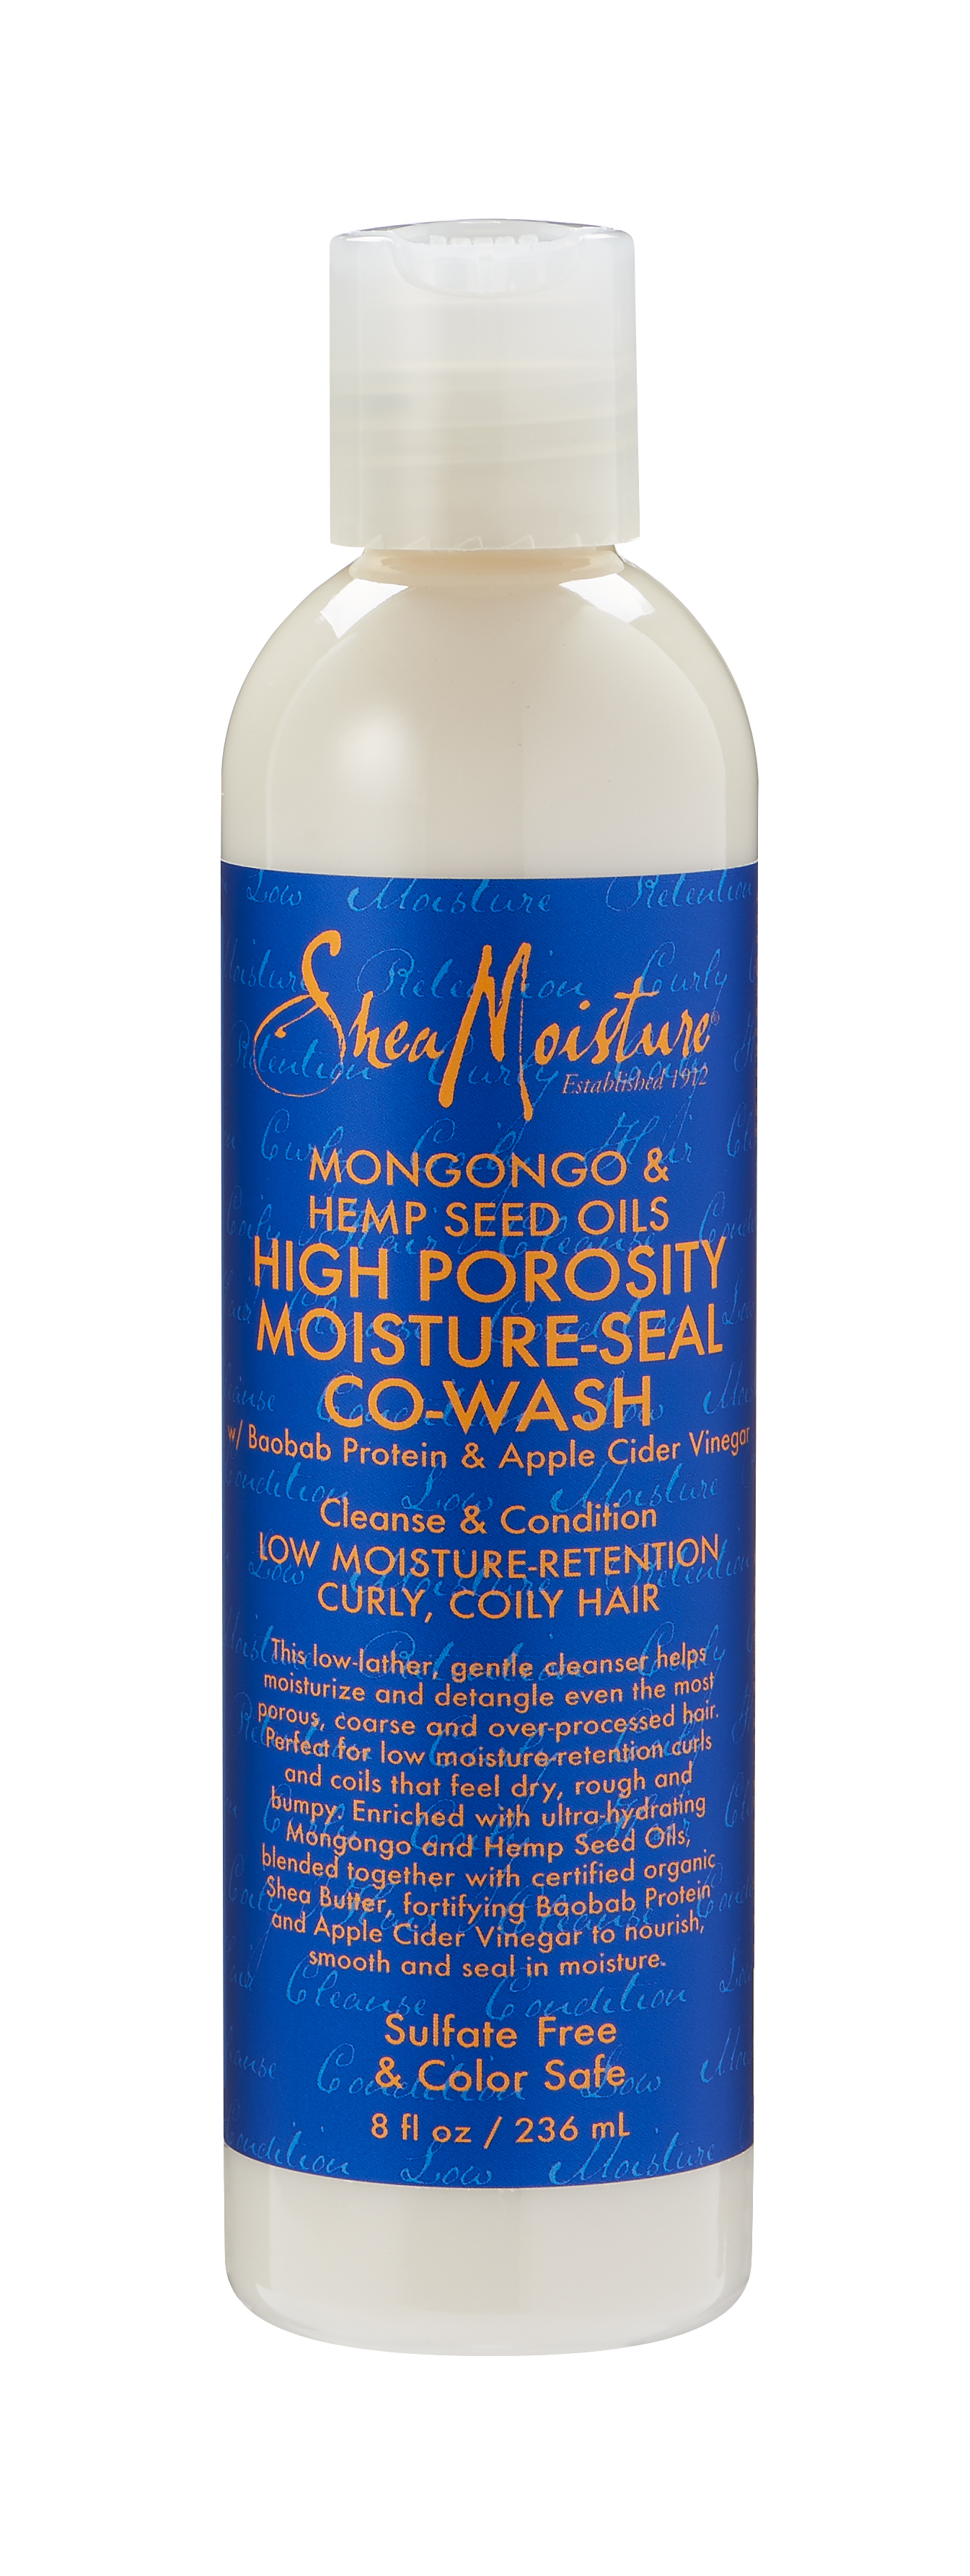 Shea Moisture High Porosity Co-Wash